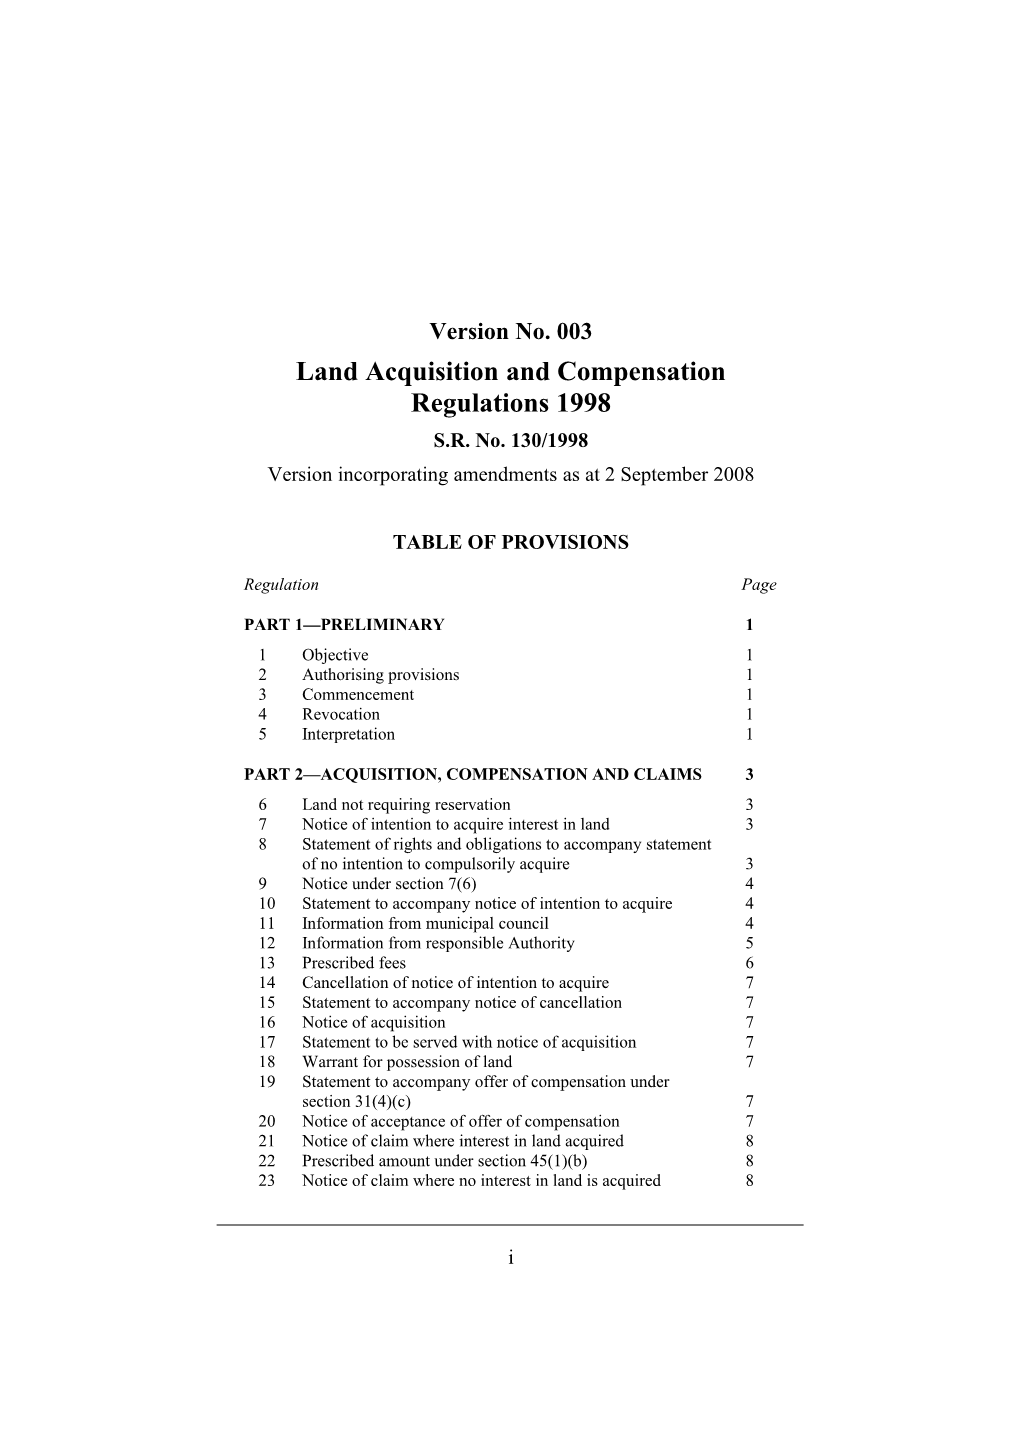 Land Acquisition and Compensation Regulations 1998